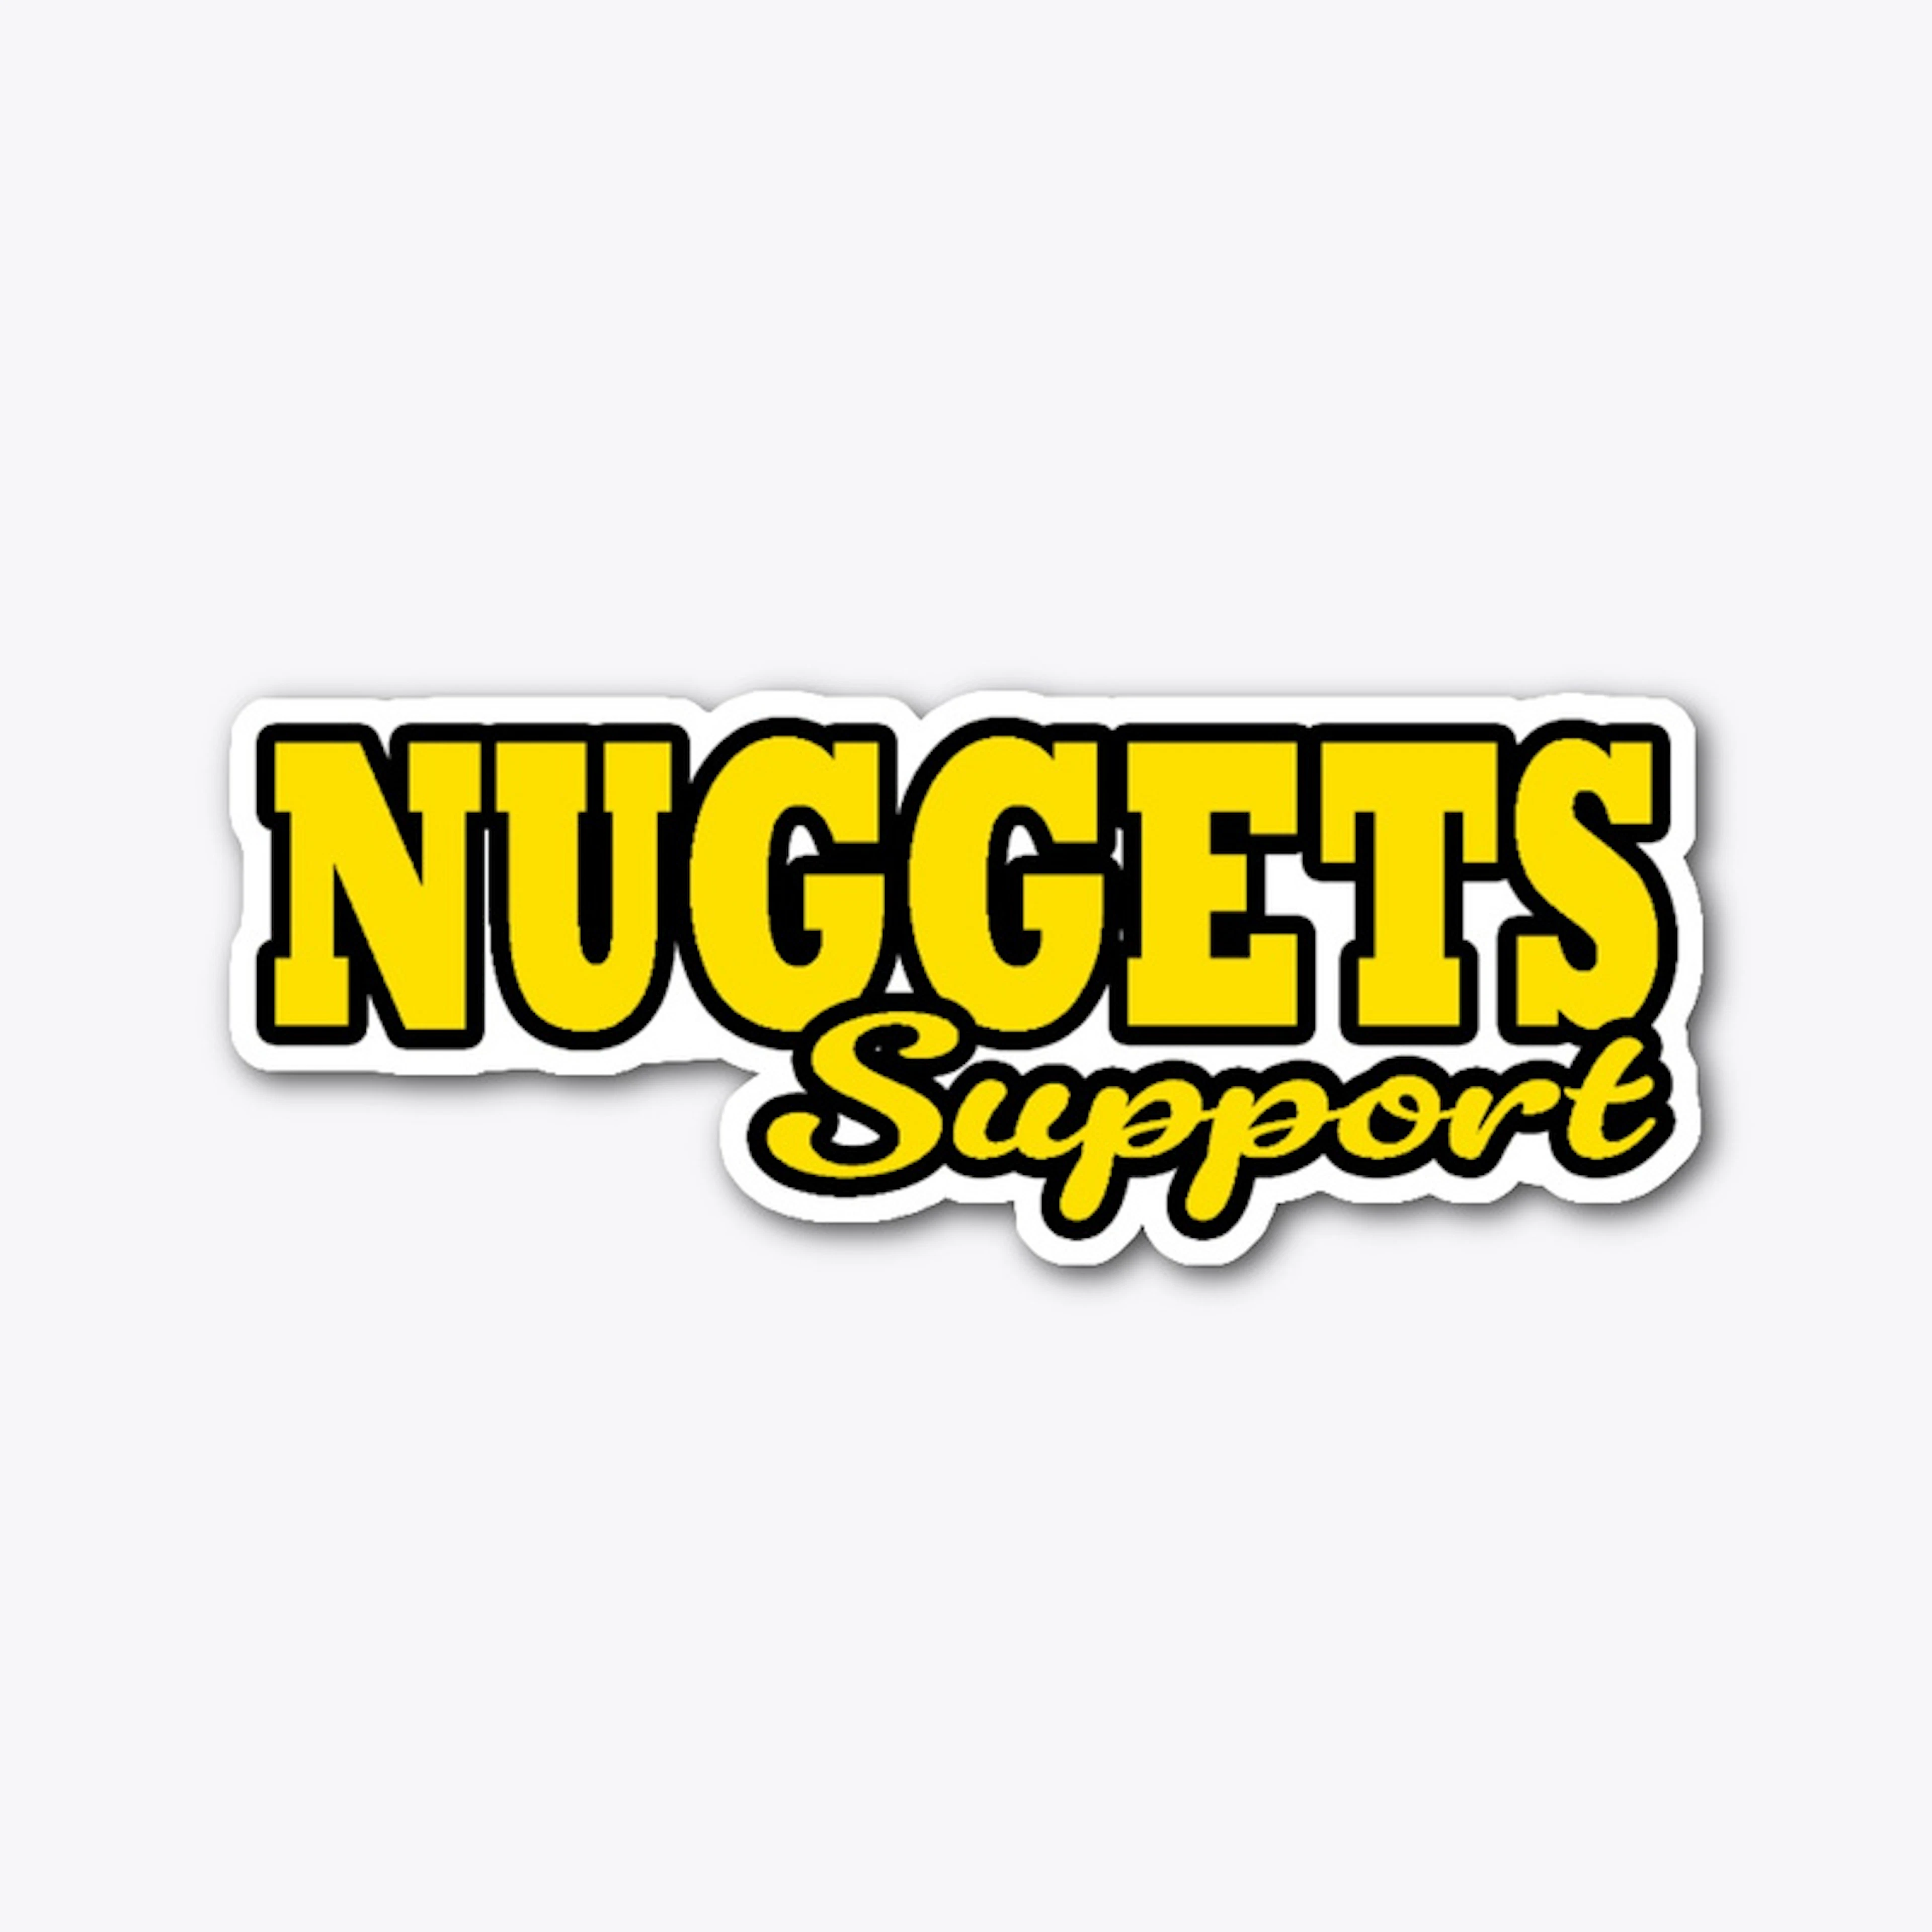 Nugget MC Beer Truck Support 